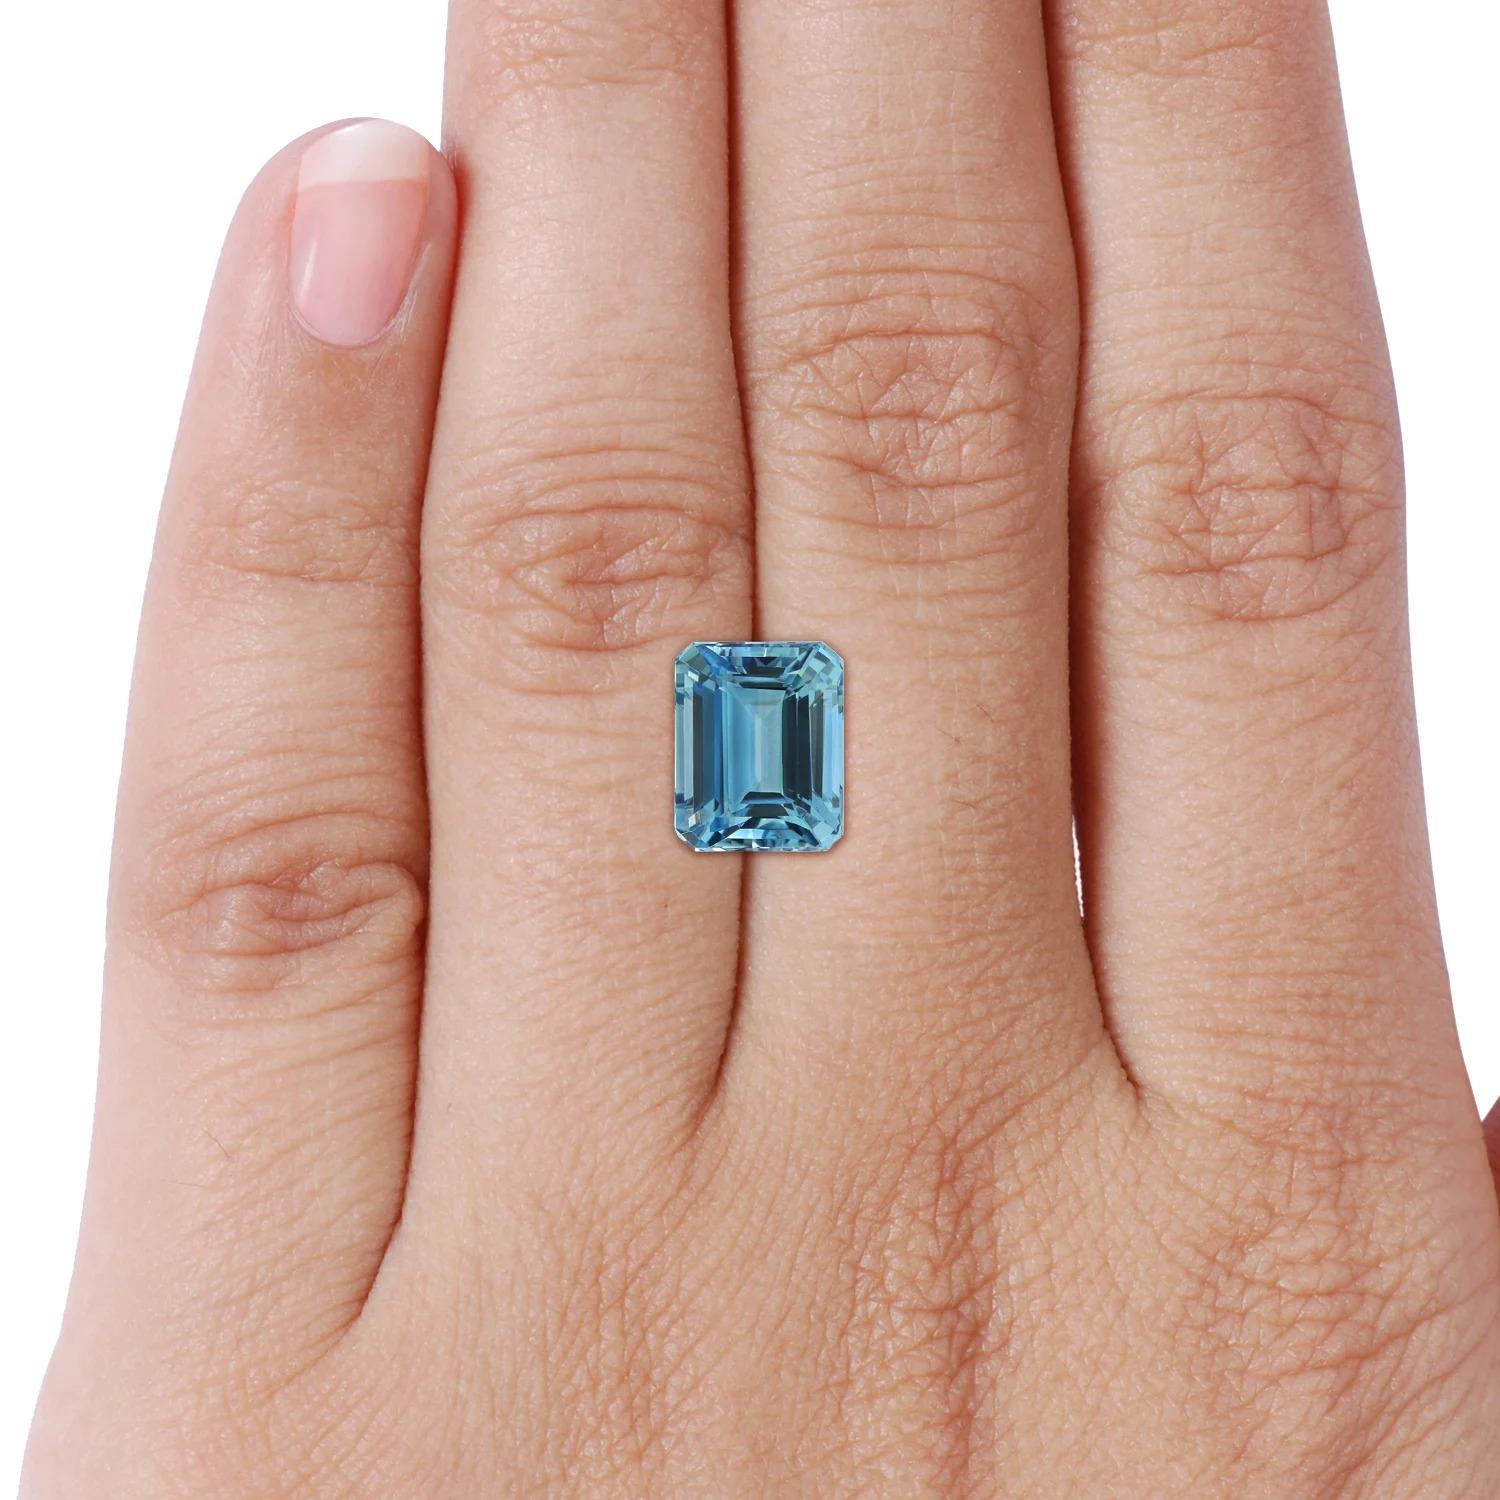 For Sale:  Angara Gia Certified Solitaire Emerald-Cut Aquamarine Ring in Platinum 7